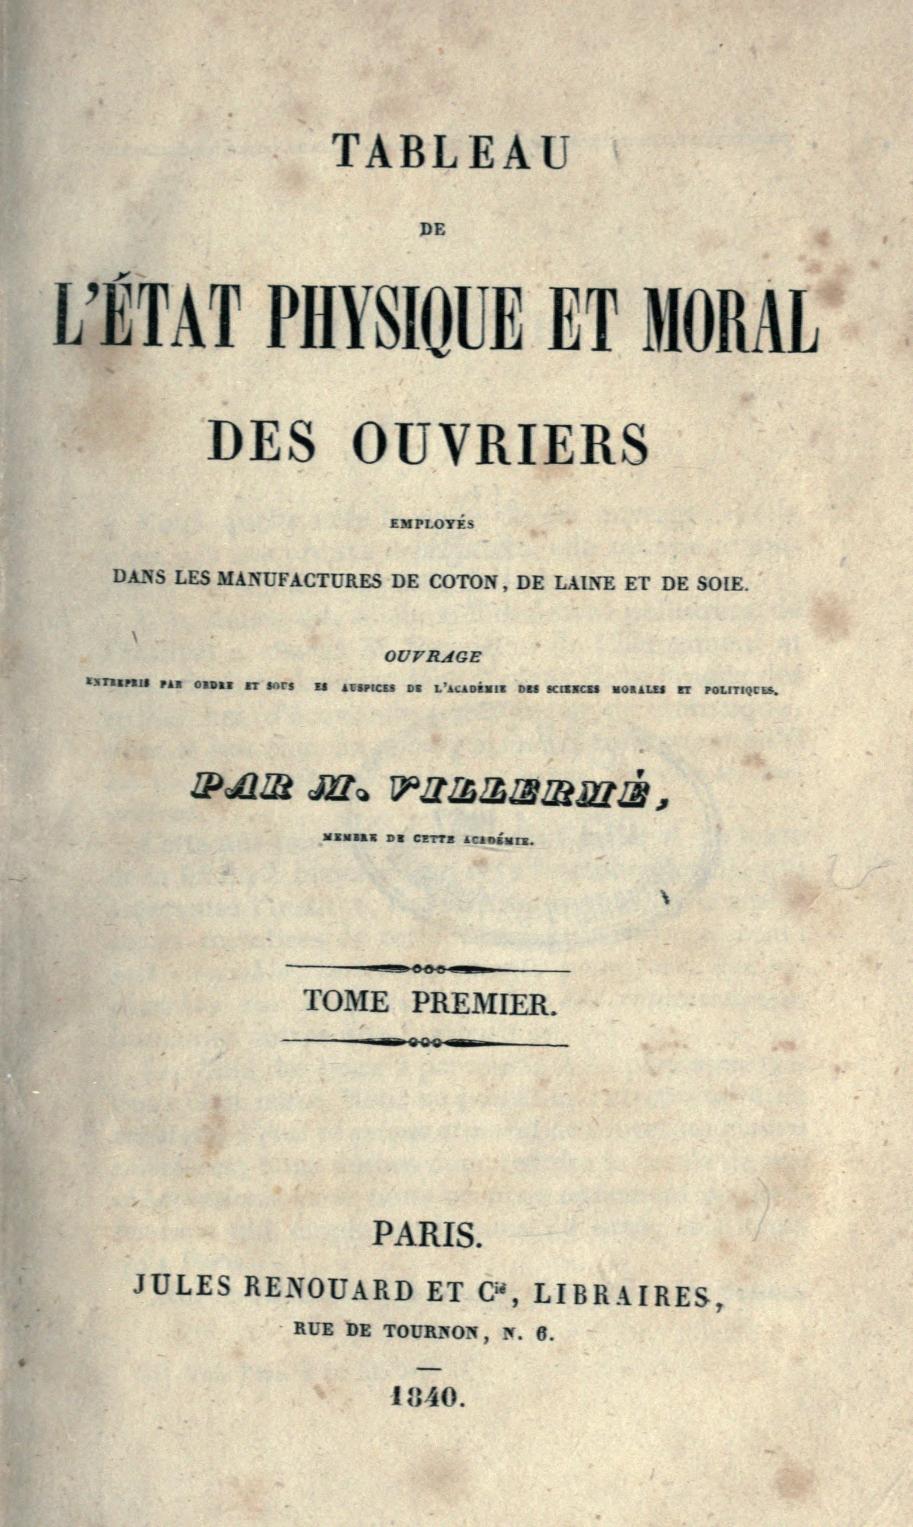 VILLERMÉ, Louis René [1840]